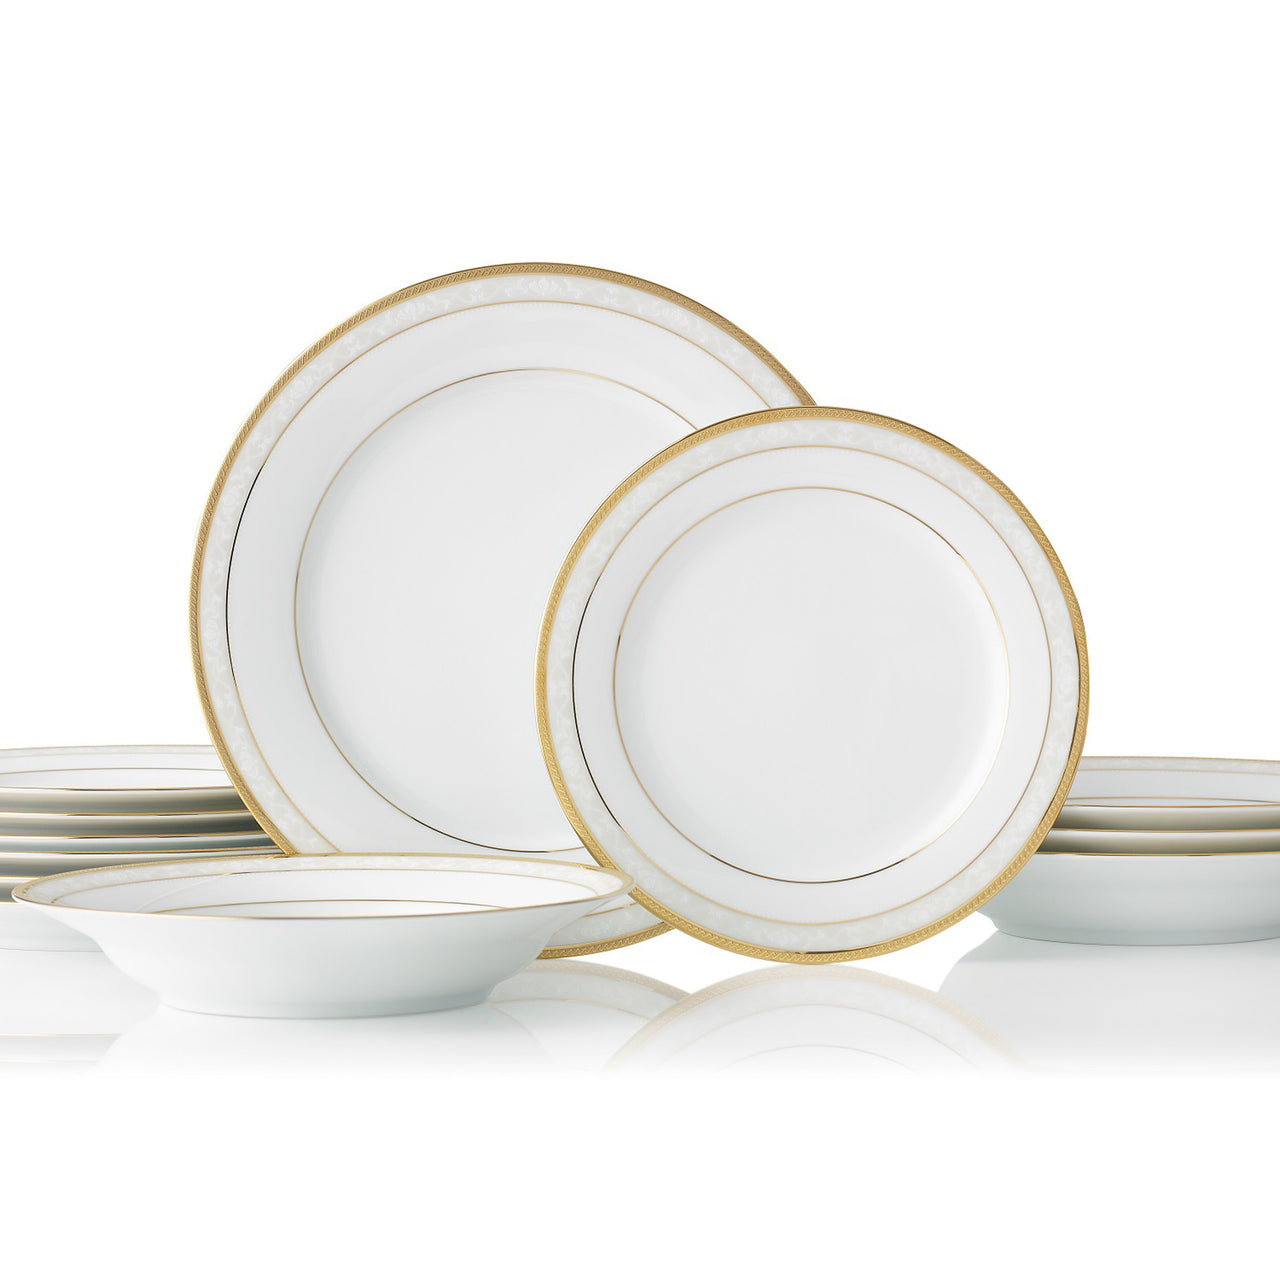 12 Piece Noritake Gold Hampshire Porcelain Dinnerware Set